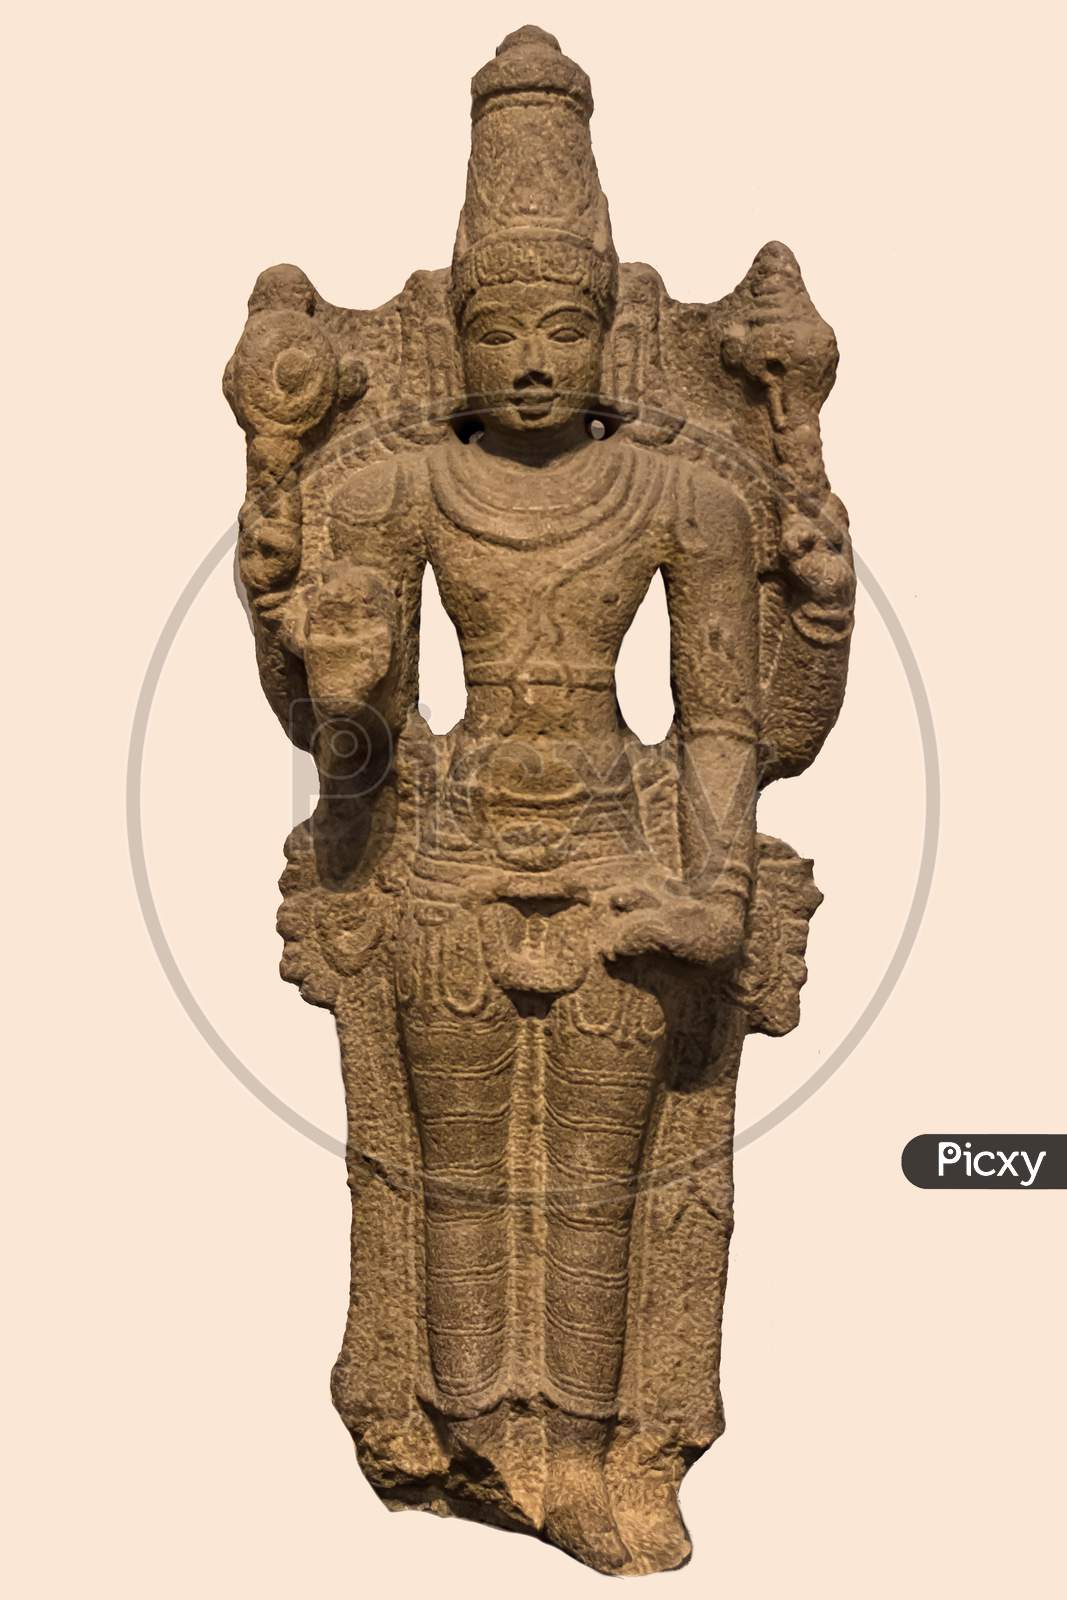 Archaeological Sculpture Of Vishnu From Indian Mythology